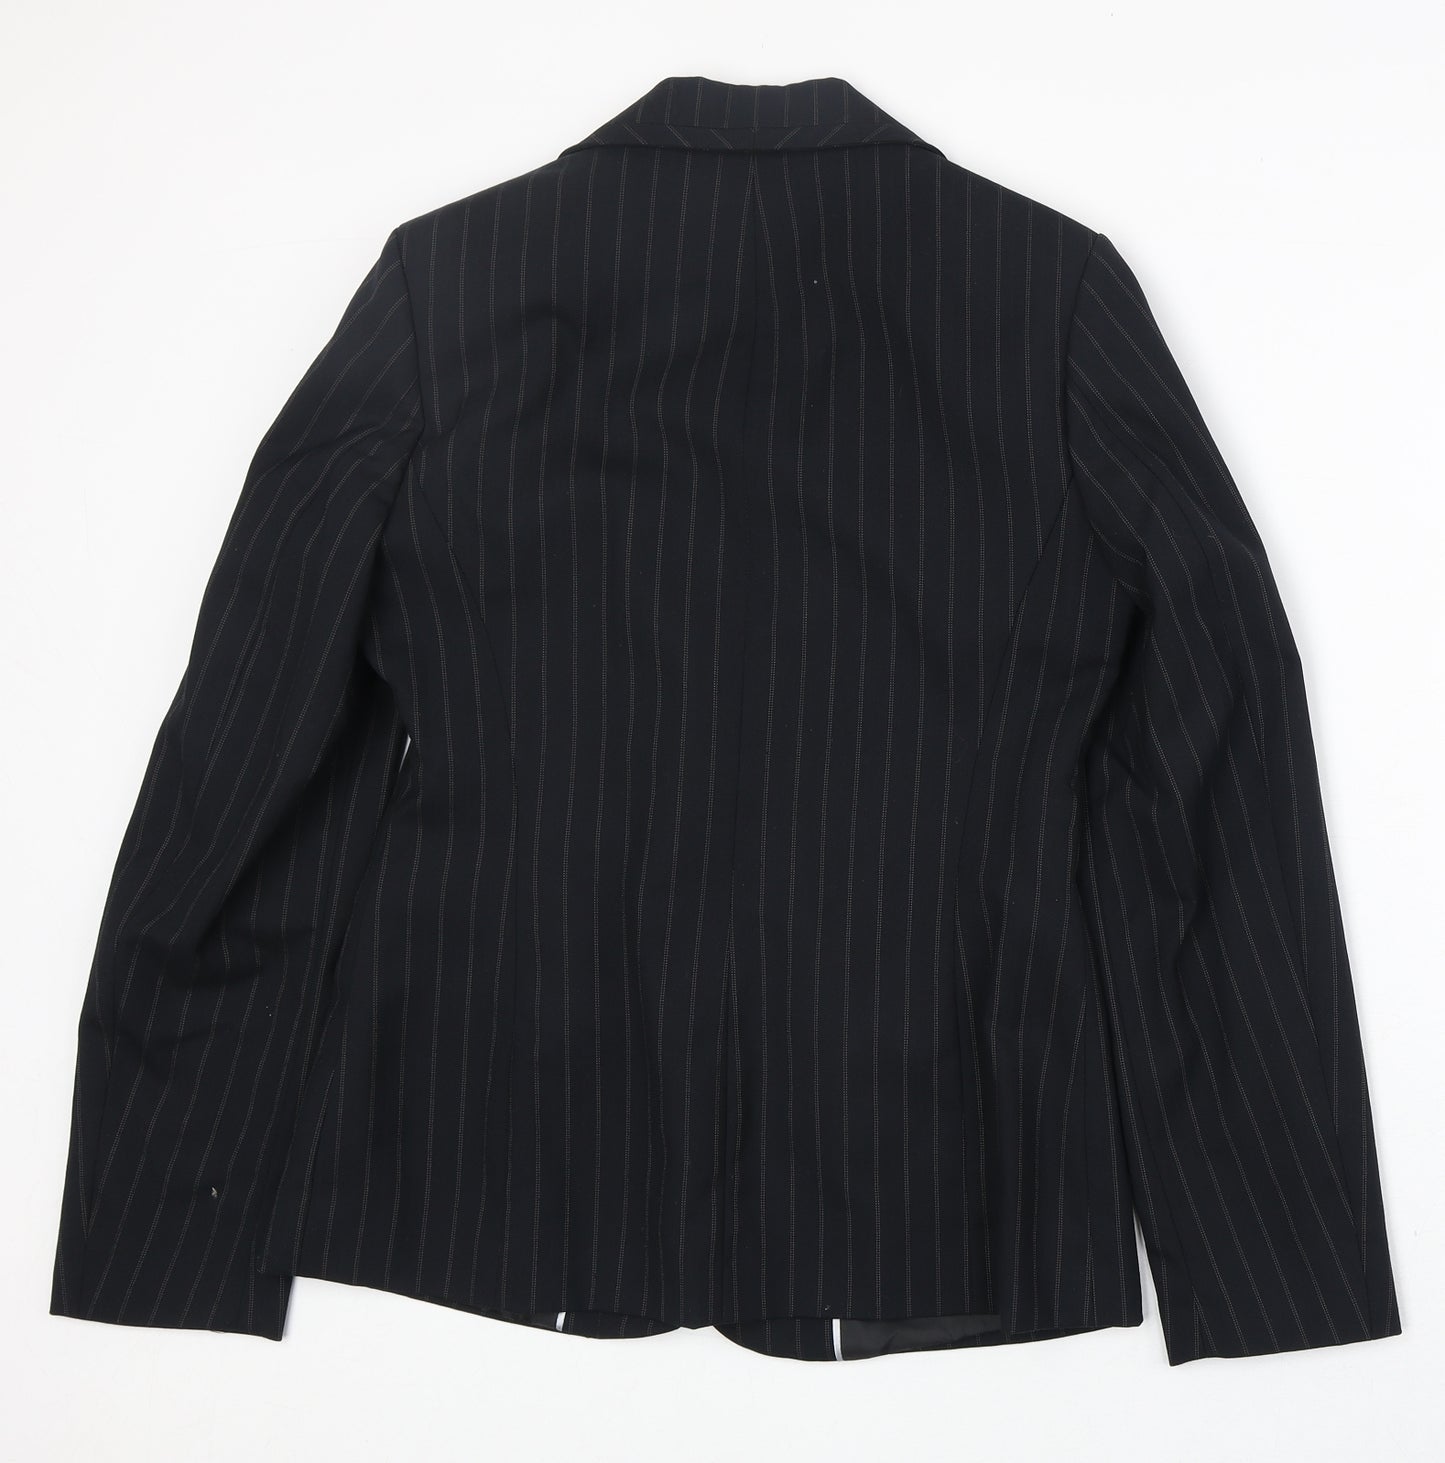 Debenhams Womens Black Striped Polyester Jacket Suit Jacket Size 10